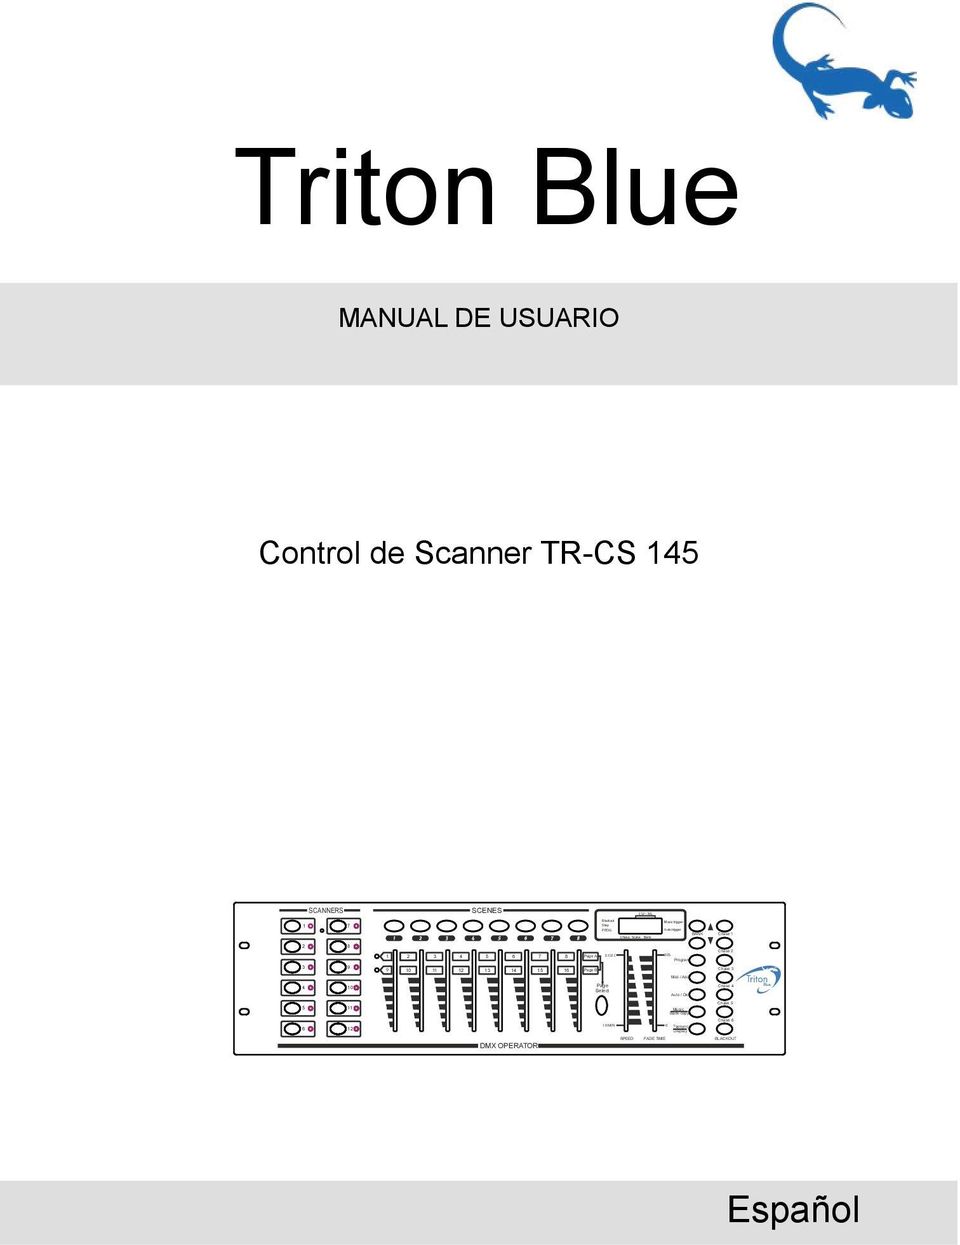 BLACKOUT Triton Blue MANUAL DE USUARIO Control de Scanner TR-CS 145 SCANNERS SCENES 1 7 2 8 1 2 3 4